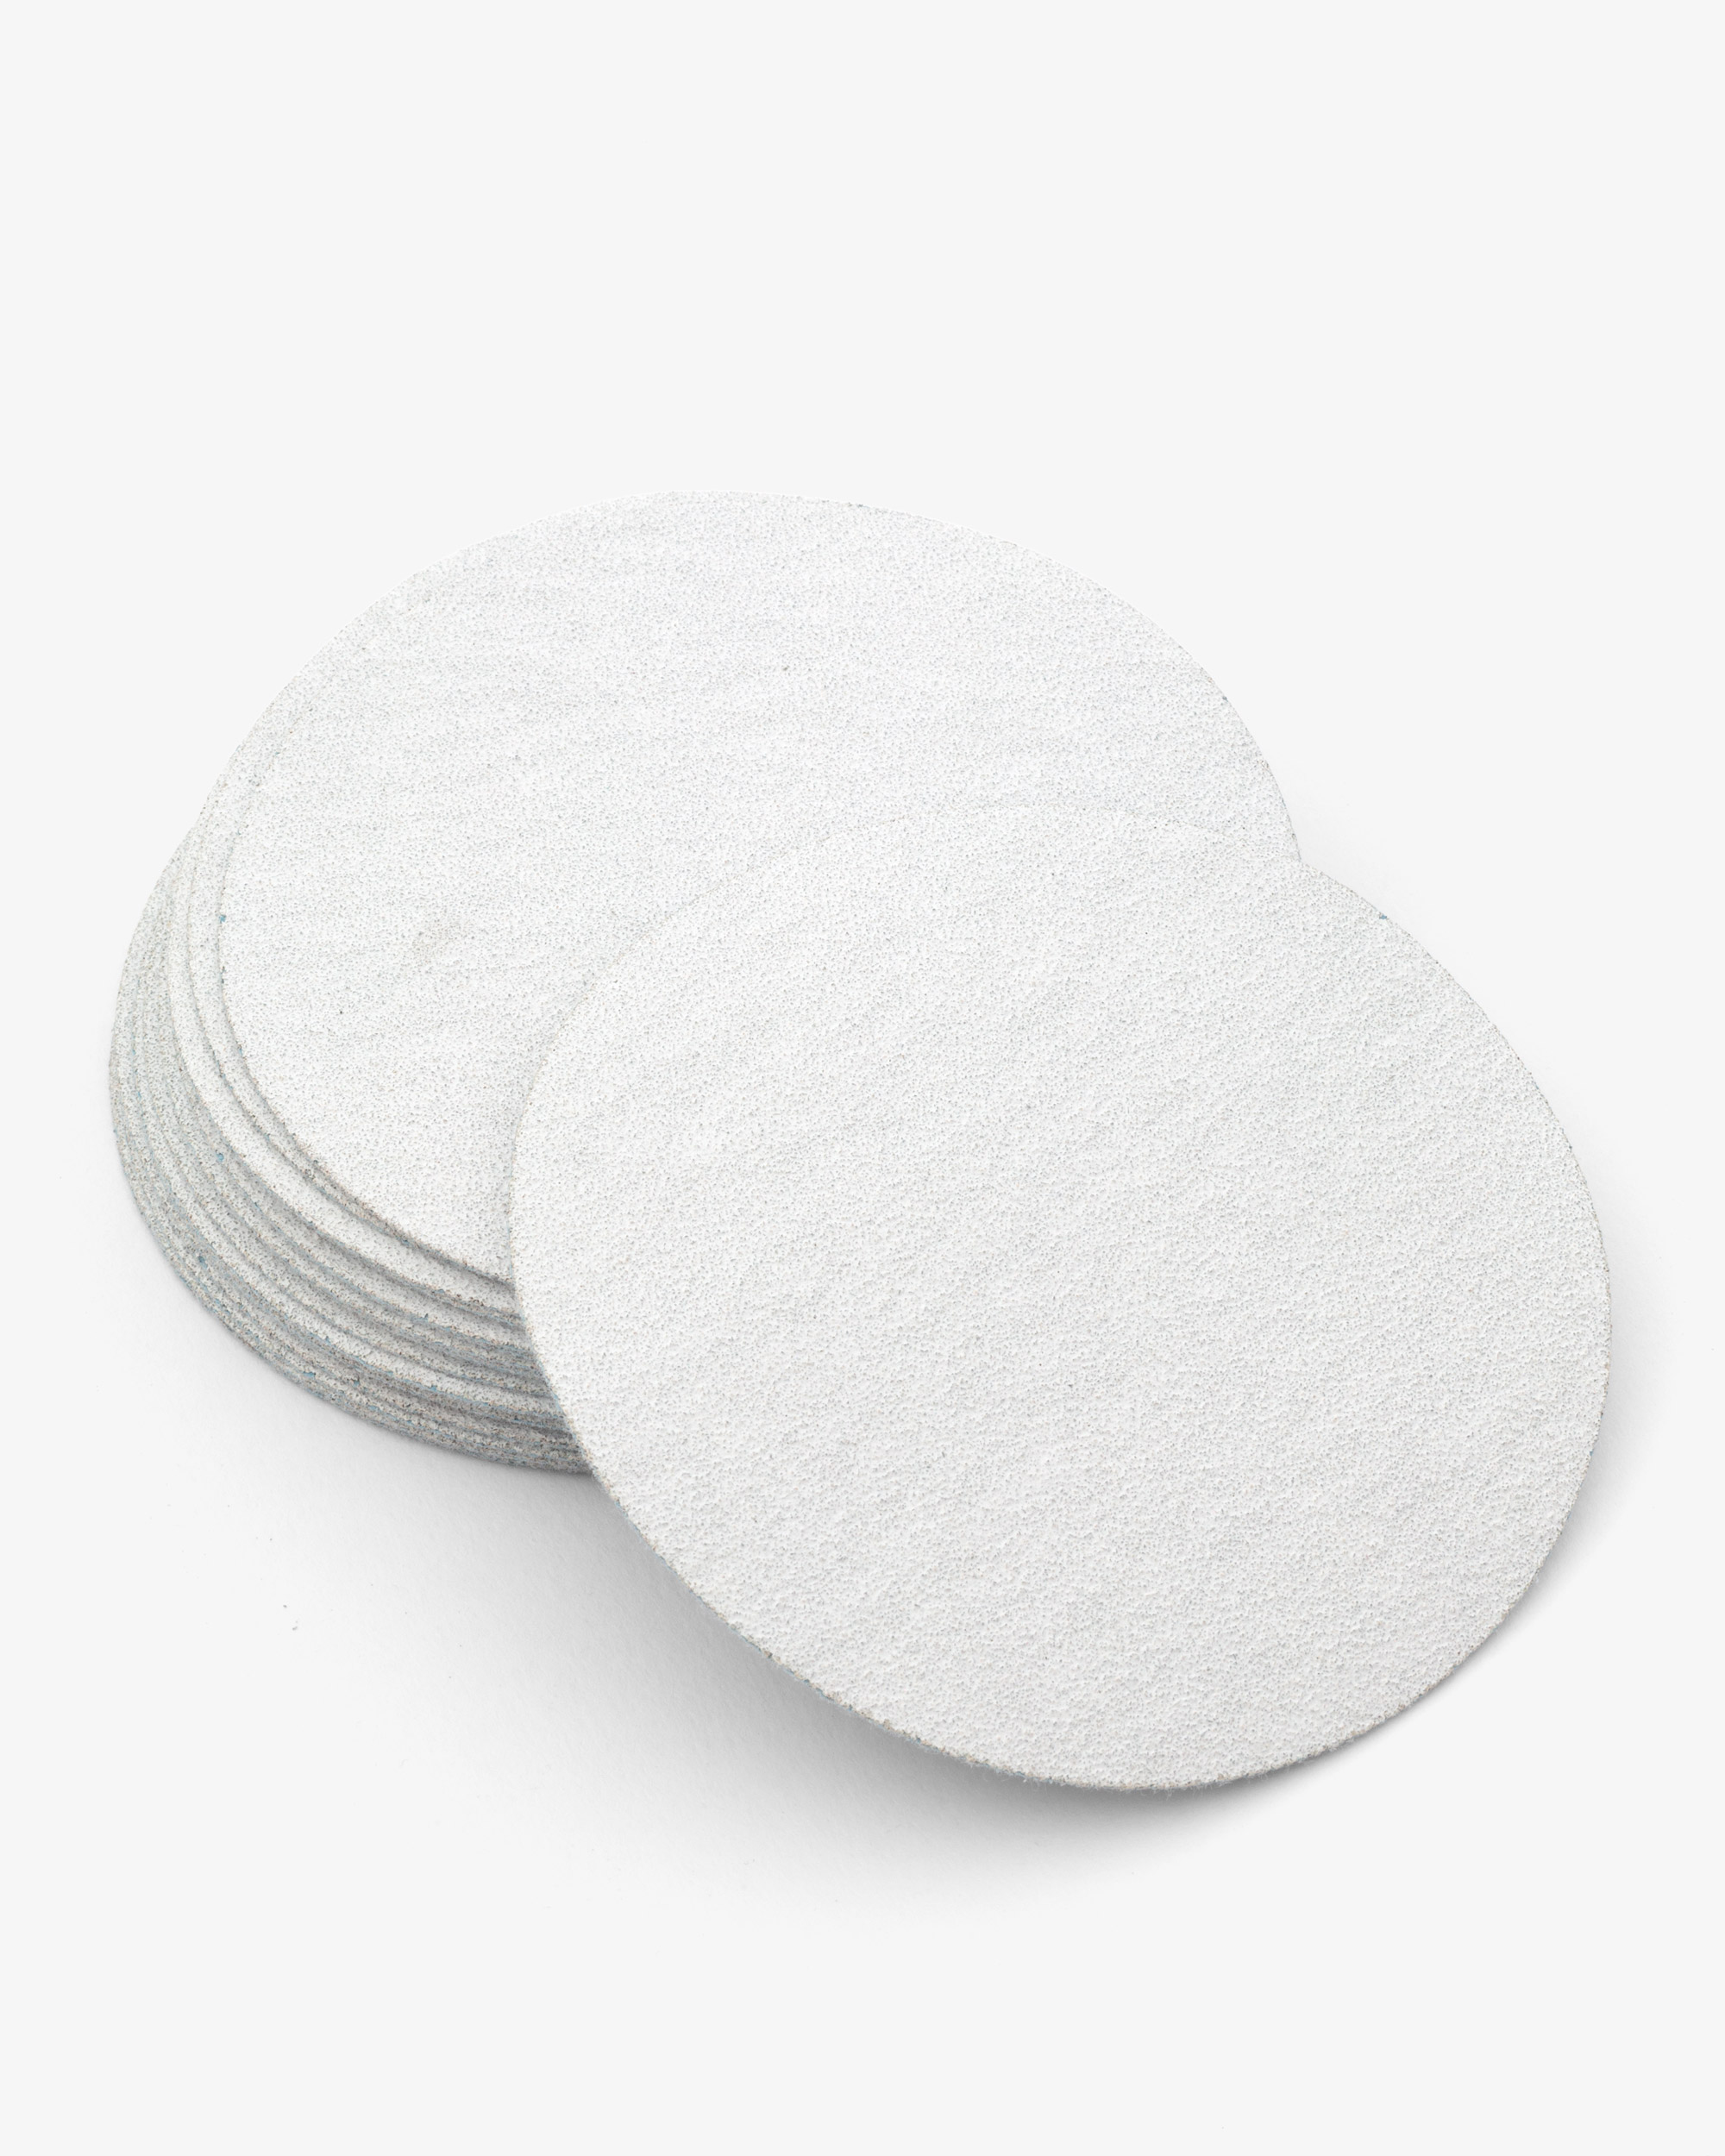 Manpa Sandpaper Discs